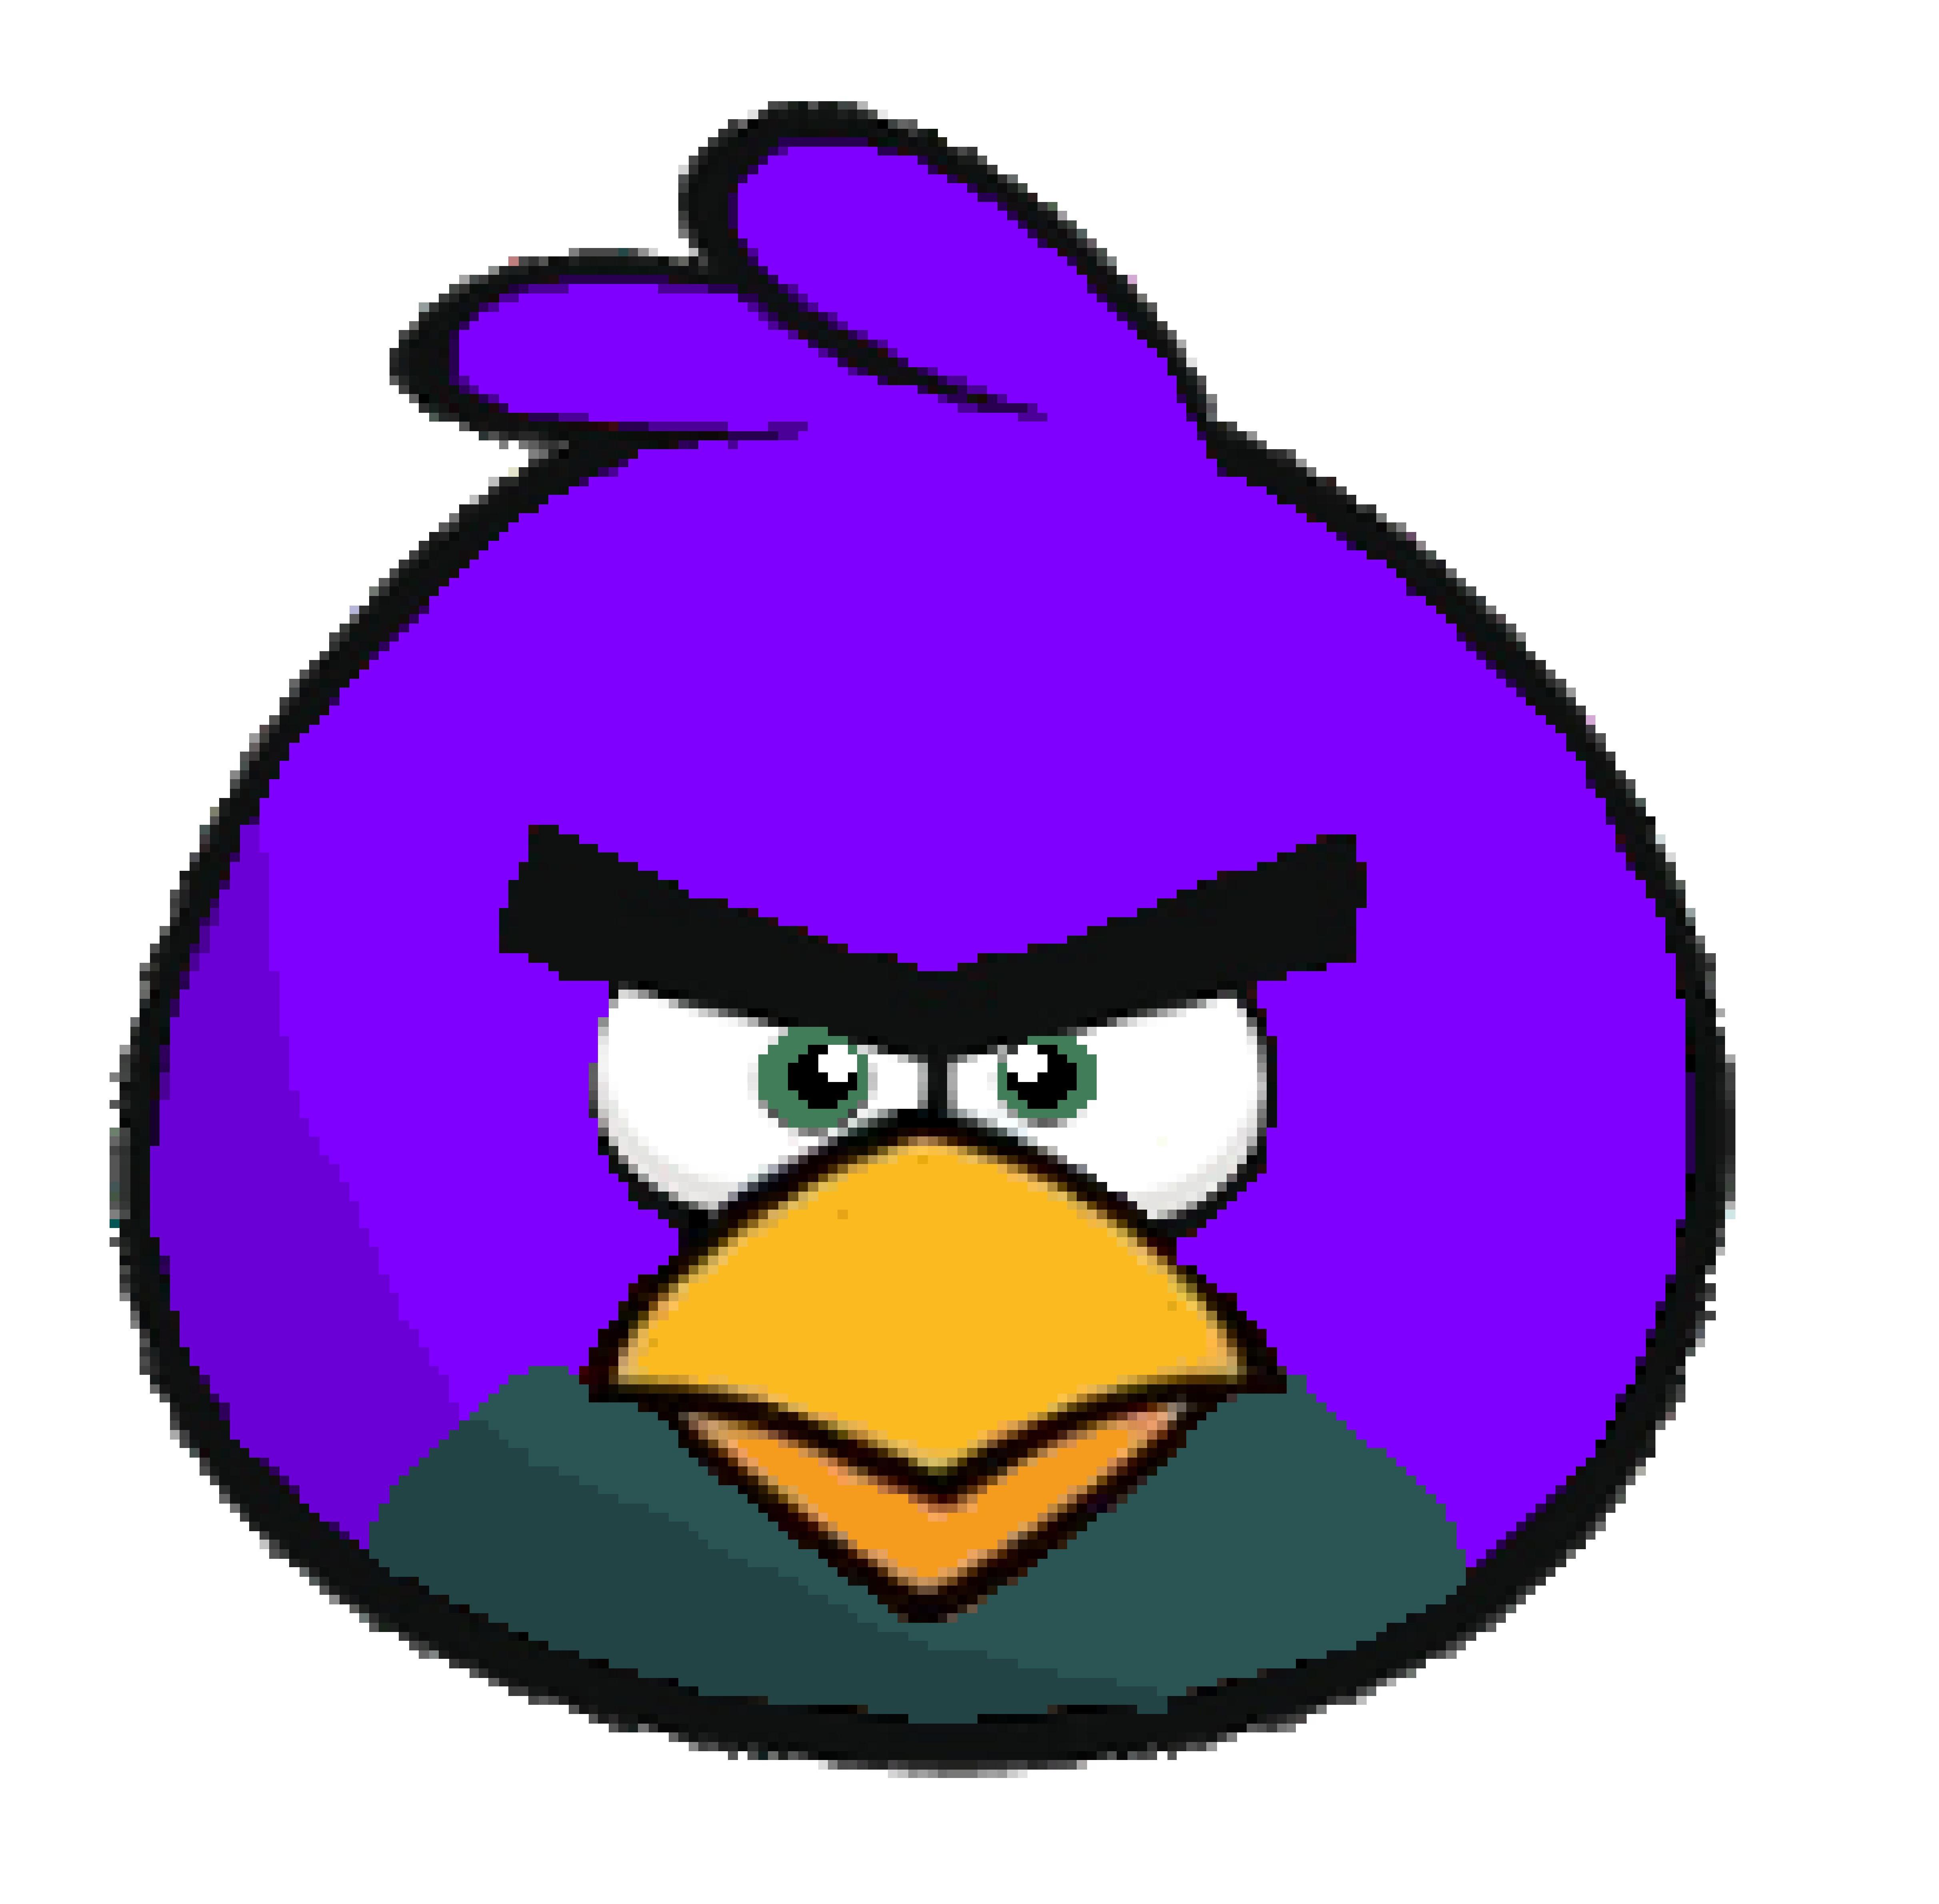 purple angry bird clip art